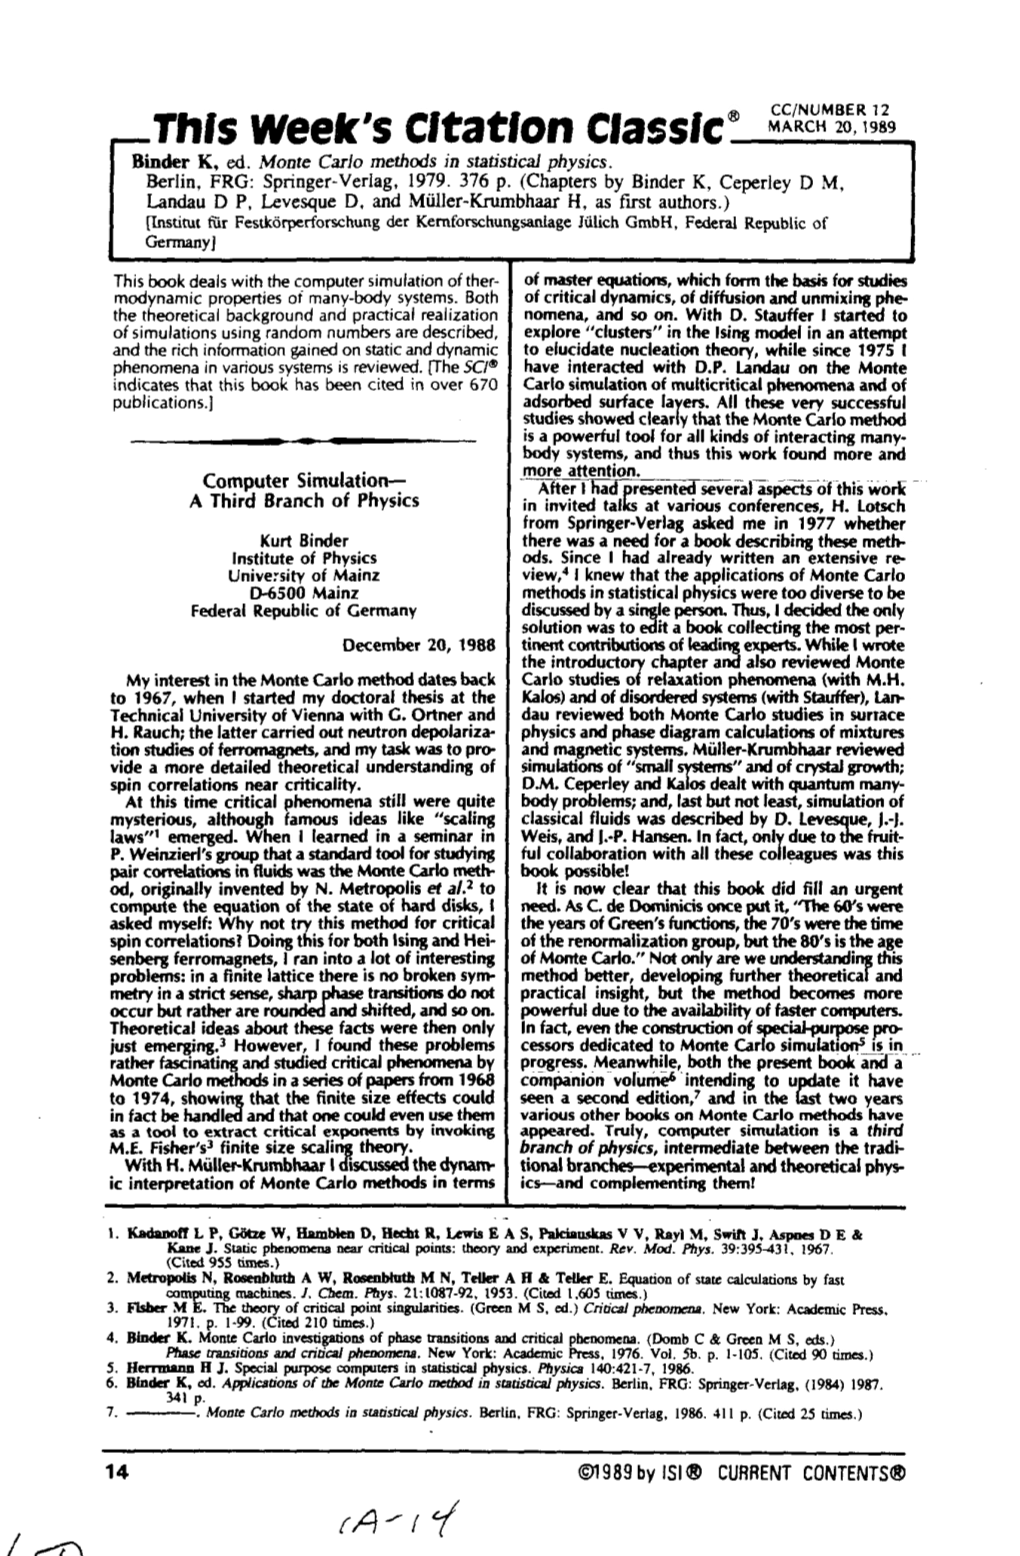 Binder K, Ed. Monte Carlo Methods in Statistical Physics. Berlin, FRG: Springer-Verlag, 1979